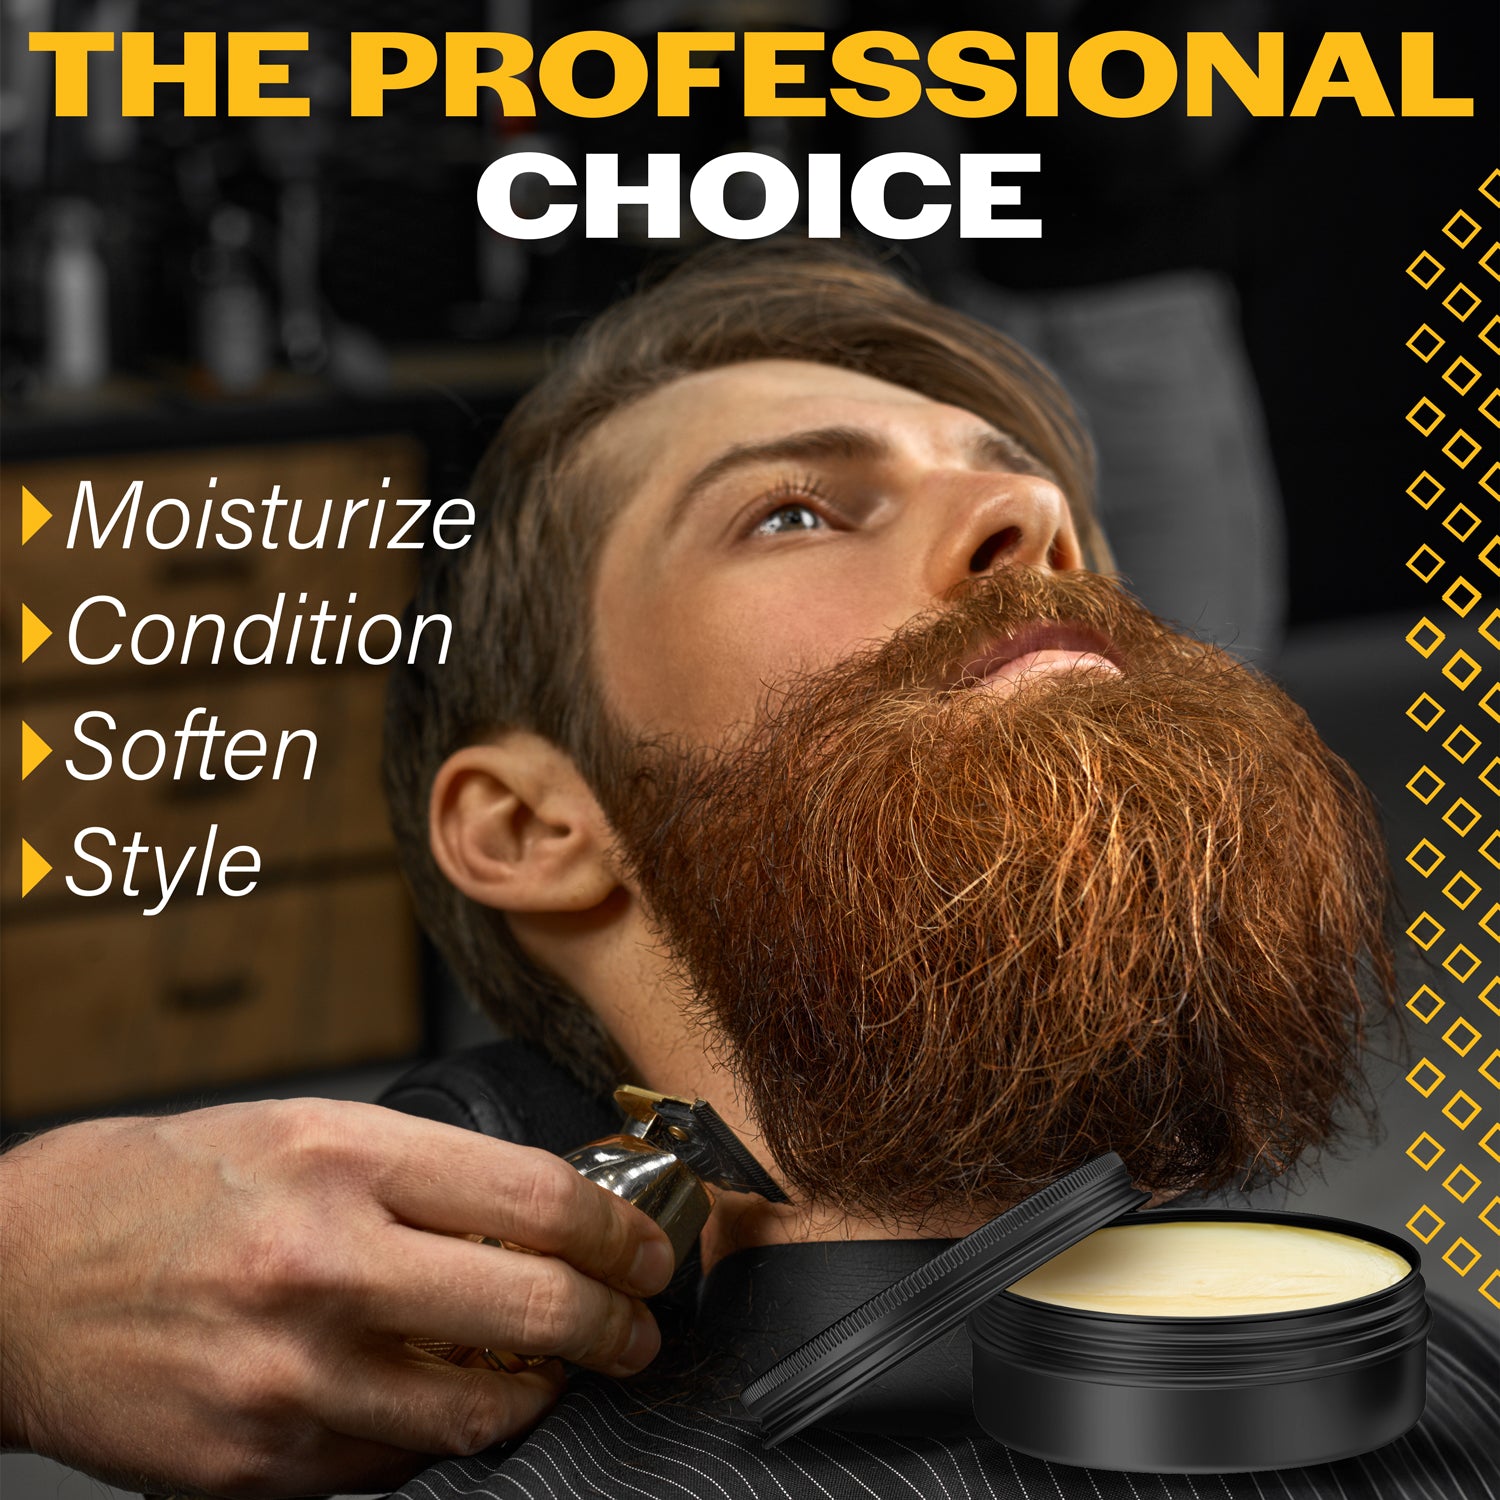 Hair Illusion Maximum Potency Biotin Beard Balm For Beard Growth And Softening